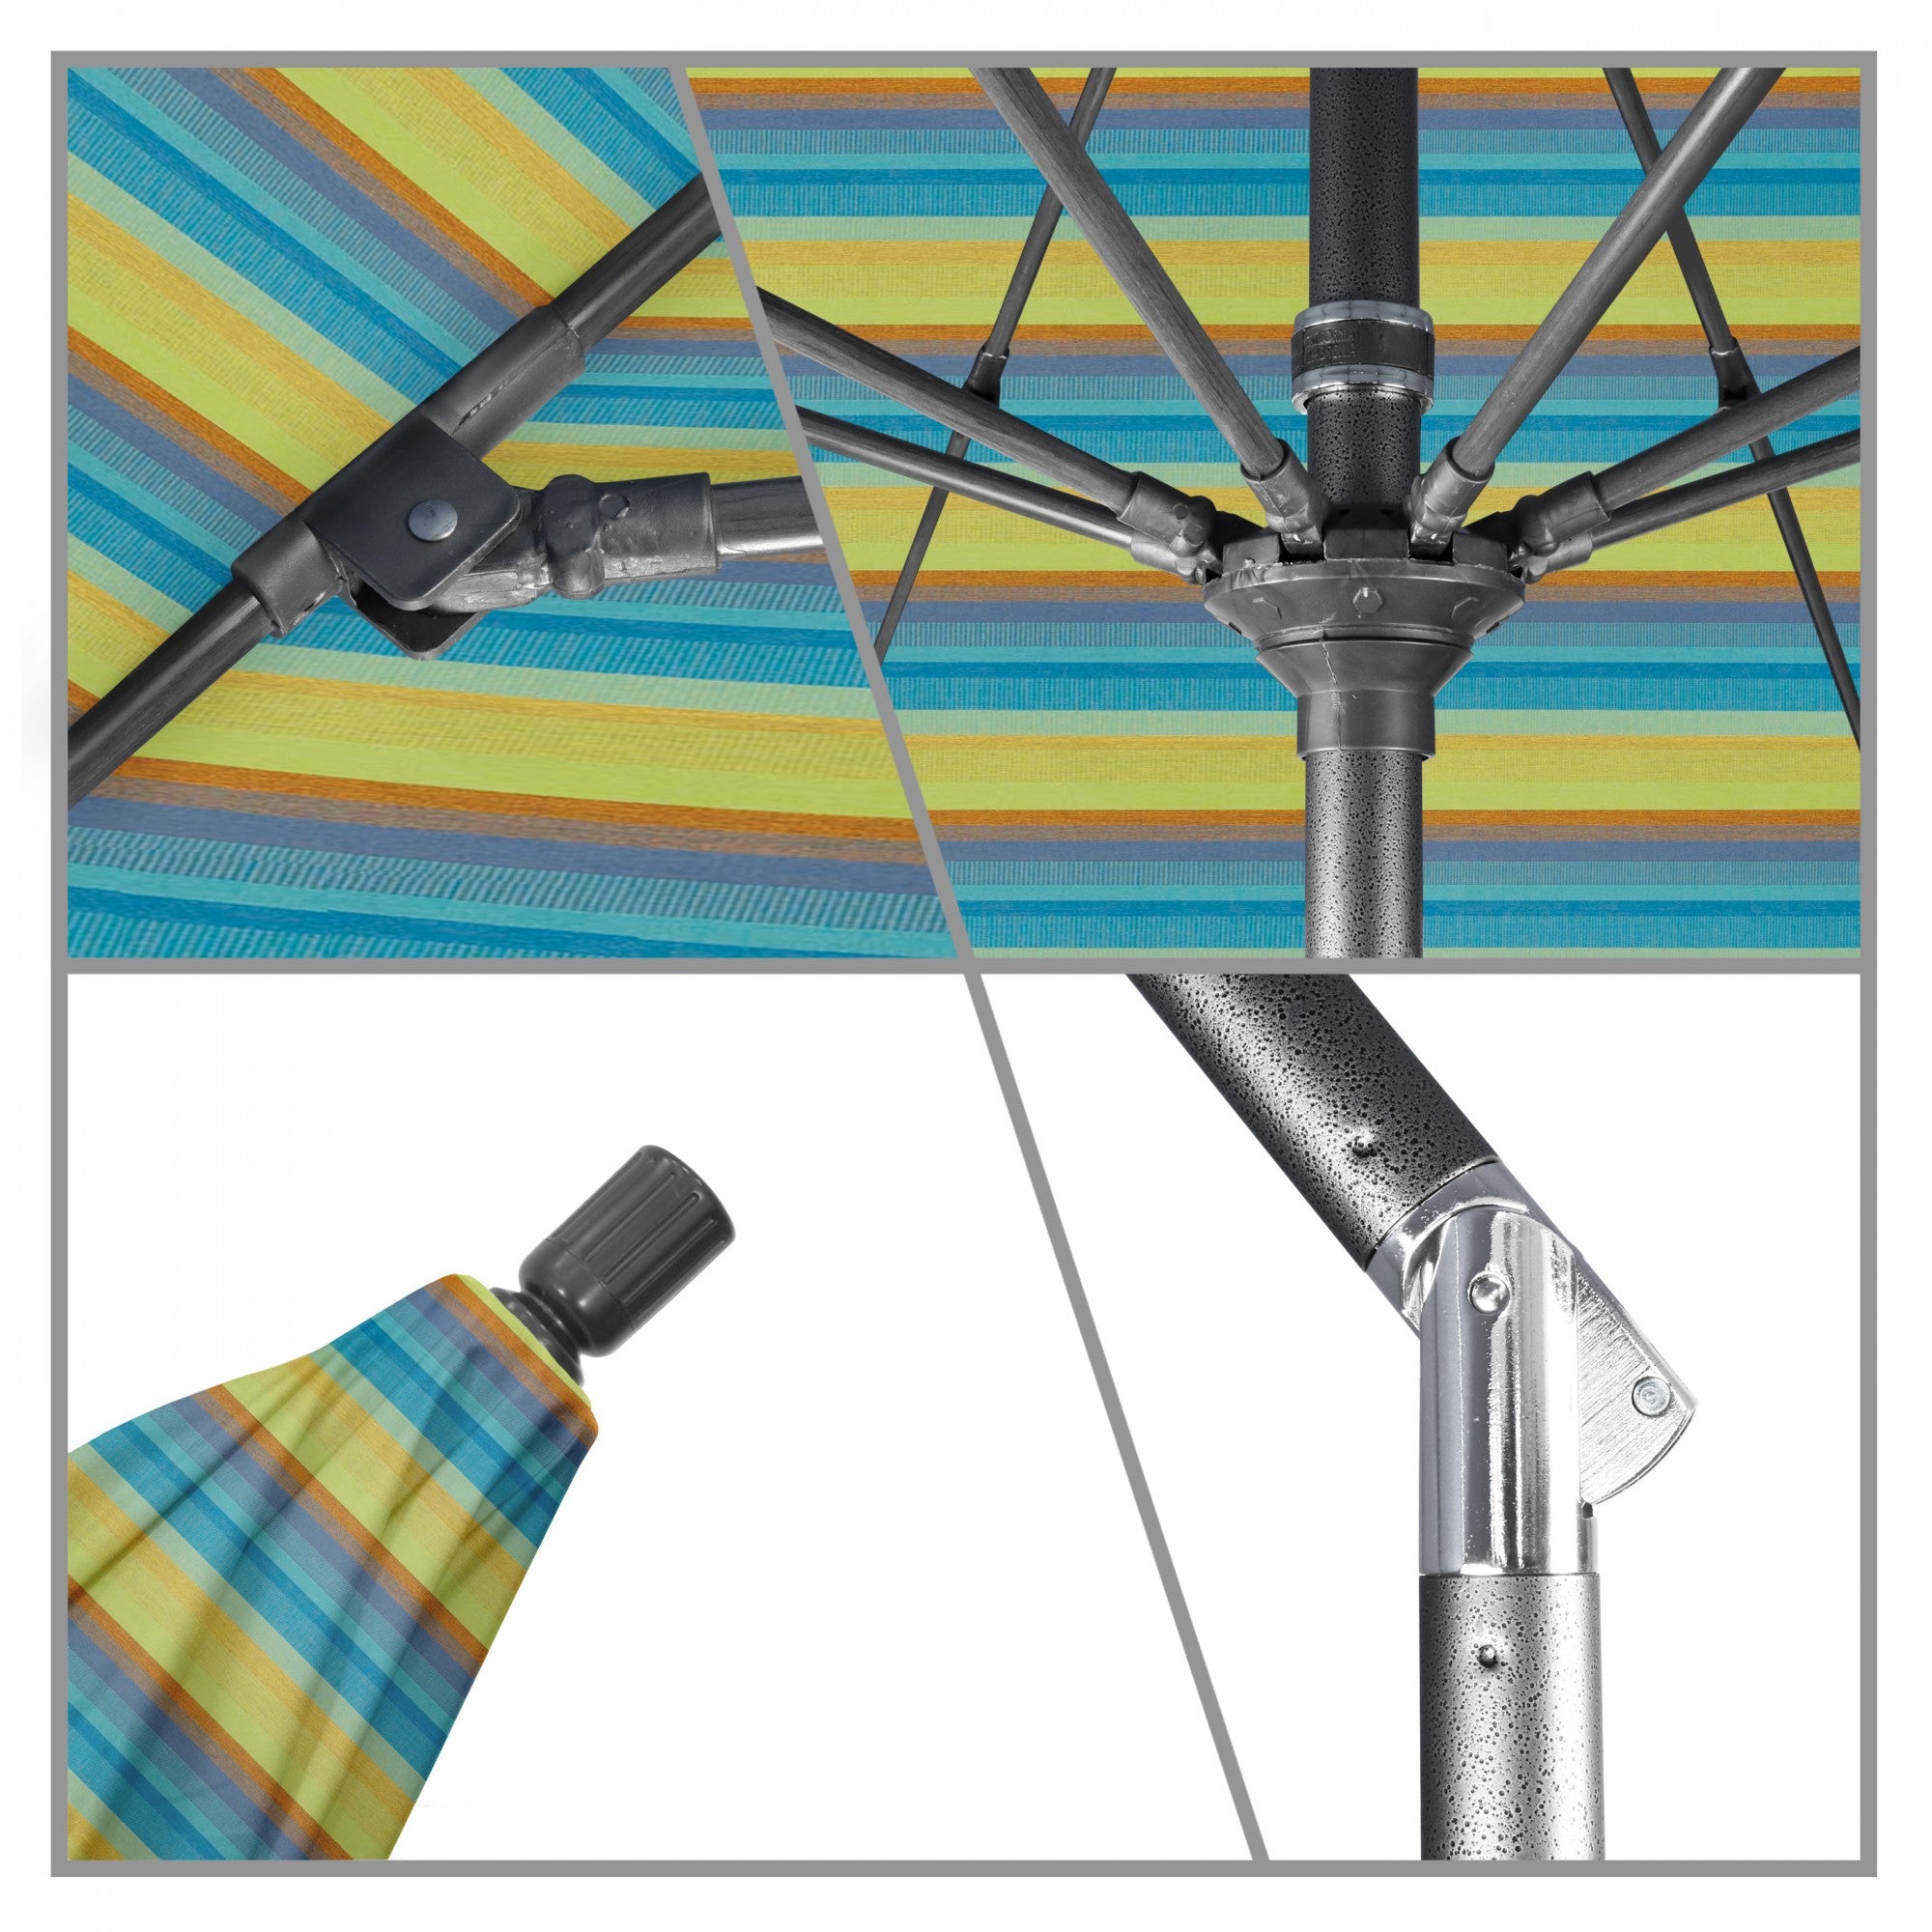 California Umbrella - 7.5' - Patio Umbrella Umbrella - Aluminum Pole - Astoria Lagoon - Sunbrella  - GSCUF758010-56096